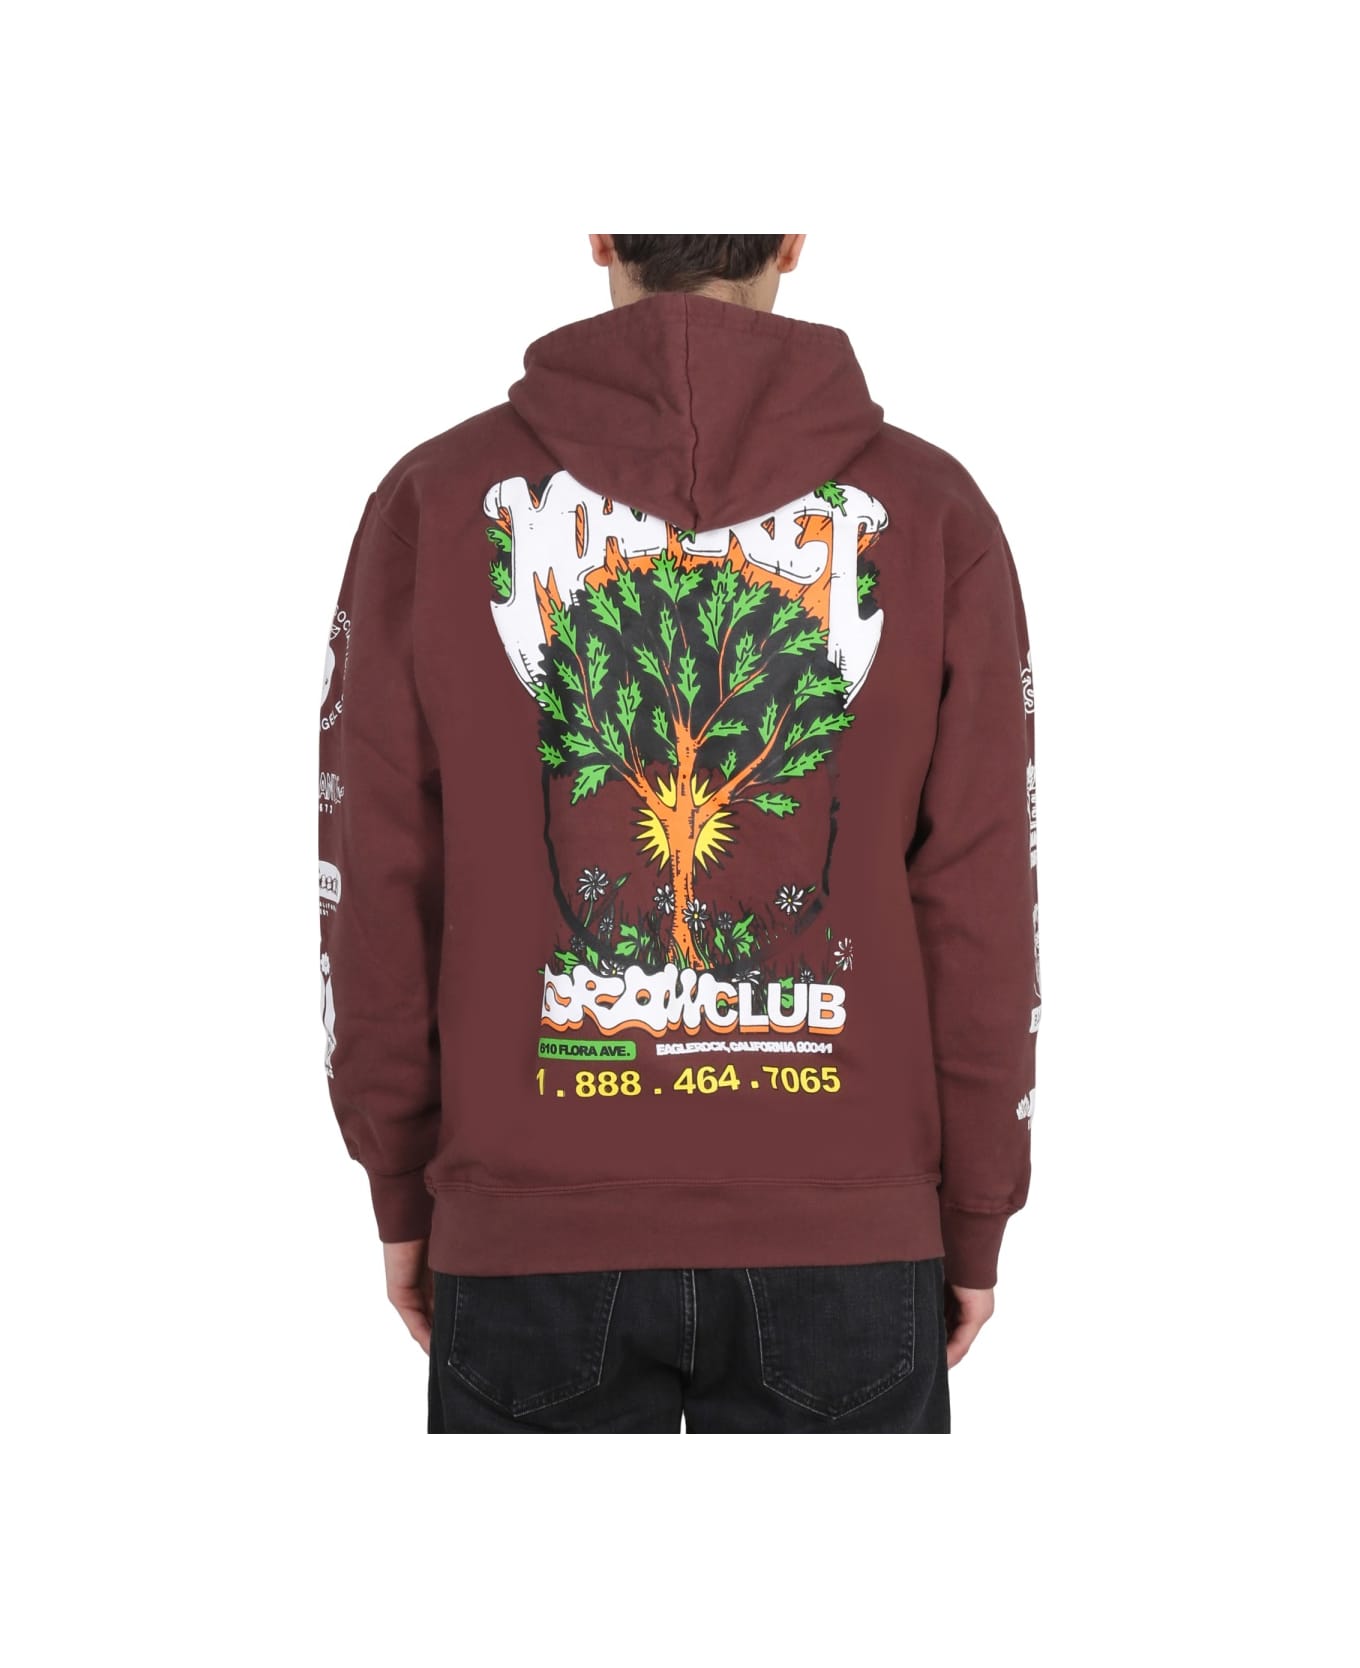 Market Growclub Sweatshirt - BROWN フリース